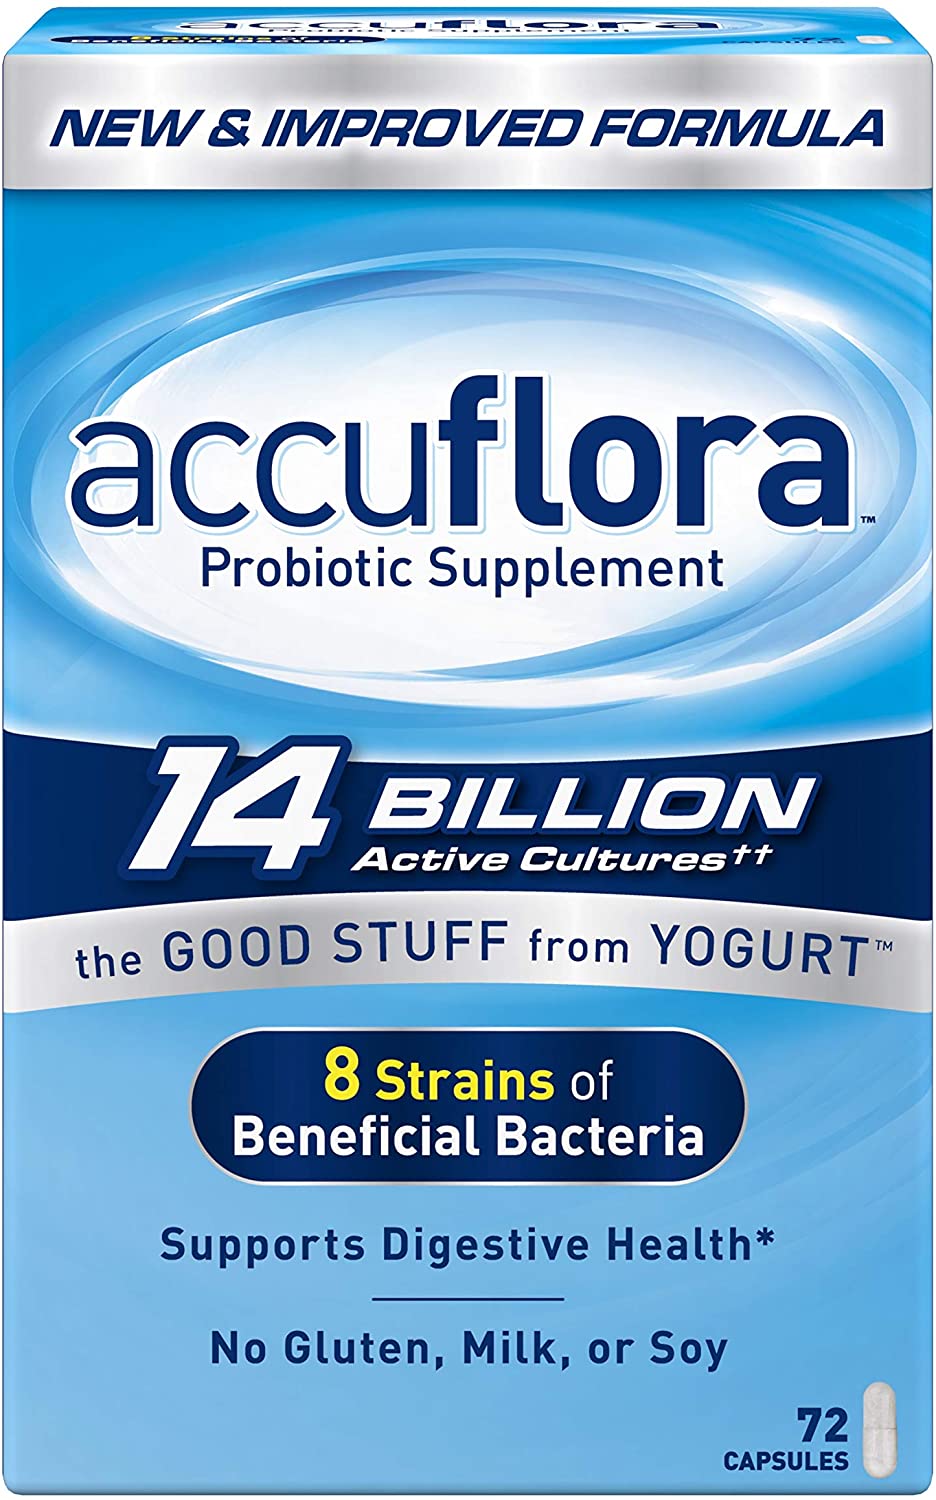 A review of Accuflora Probiotic